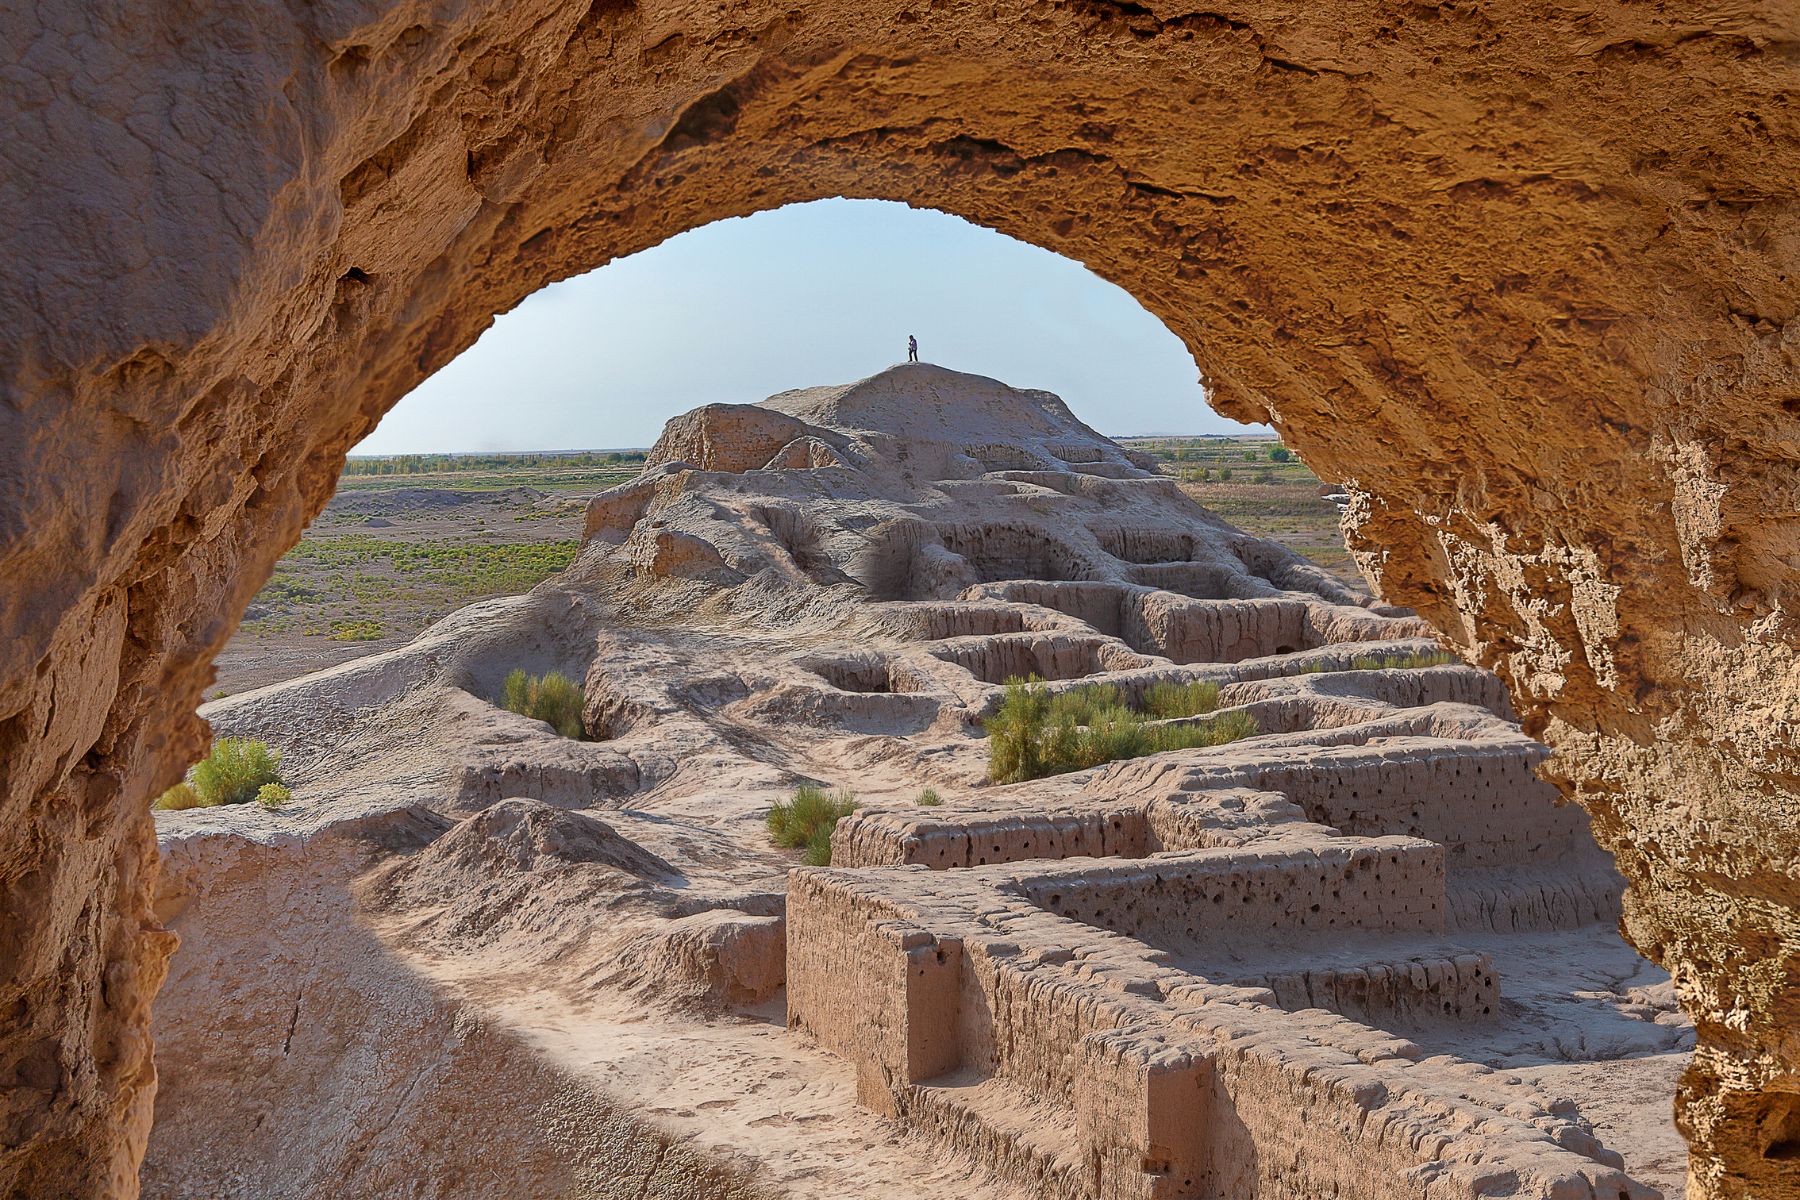 The ruins of Toprak Kala in ancient Khorezm, Karakalpakstan